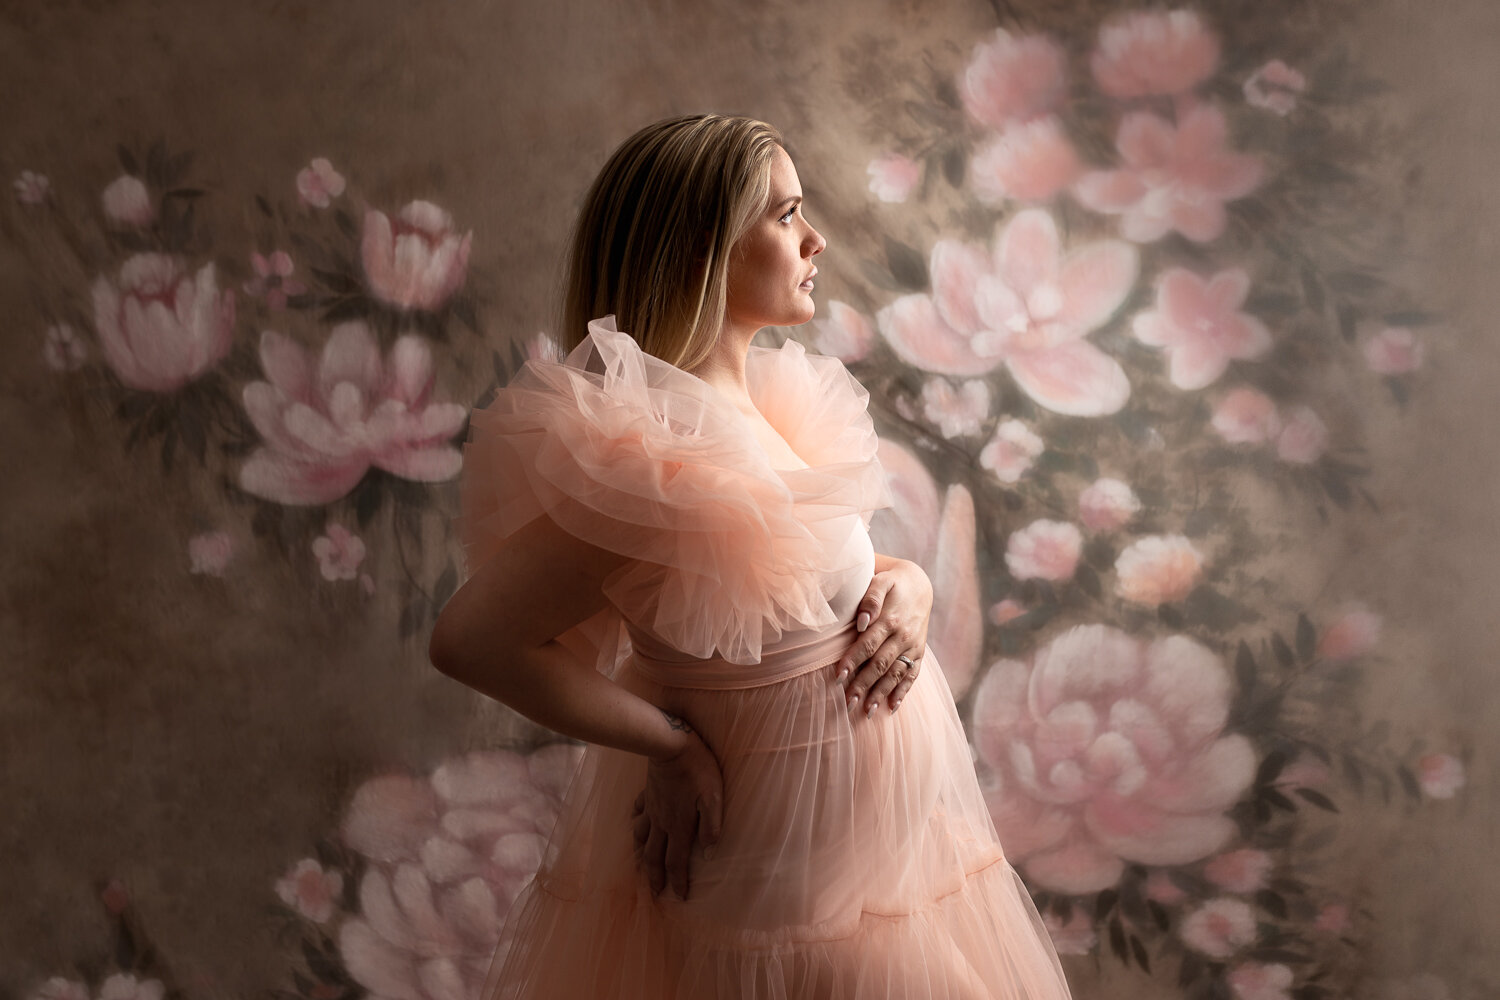 Introducing studio maternity photoshoots! — Kasia Soszka Photography